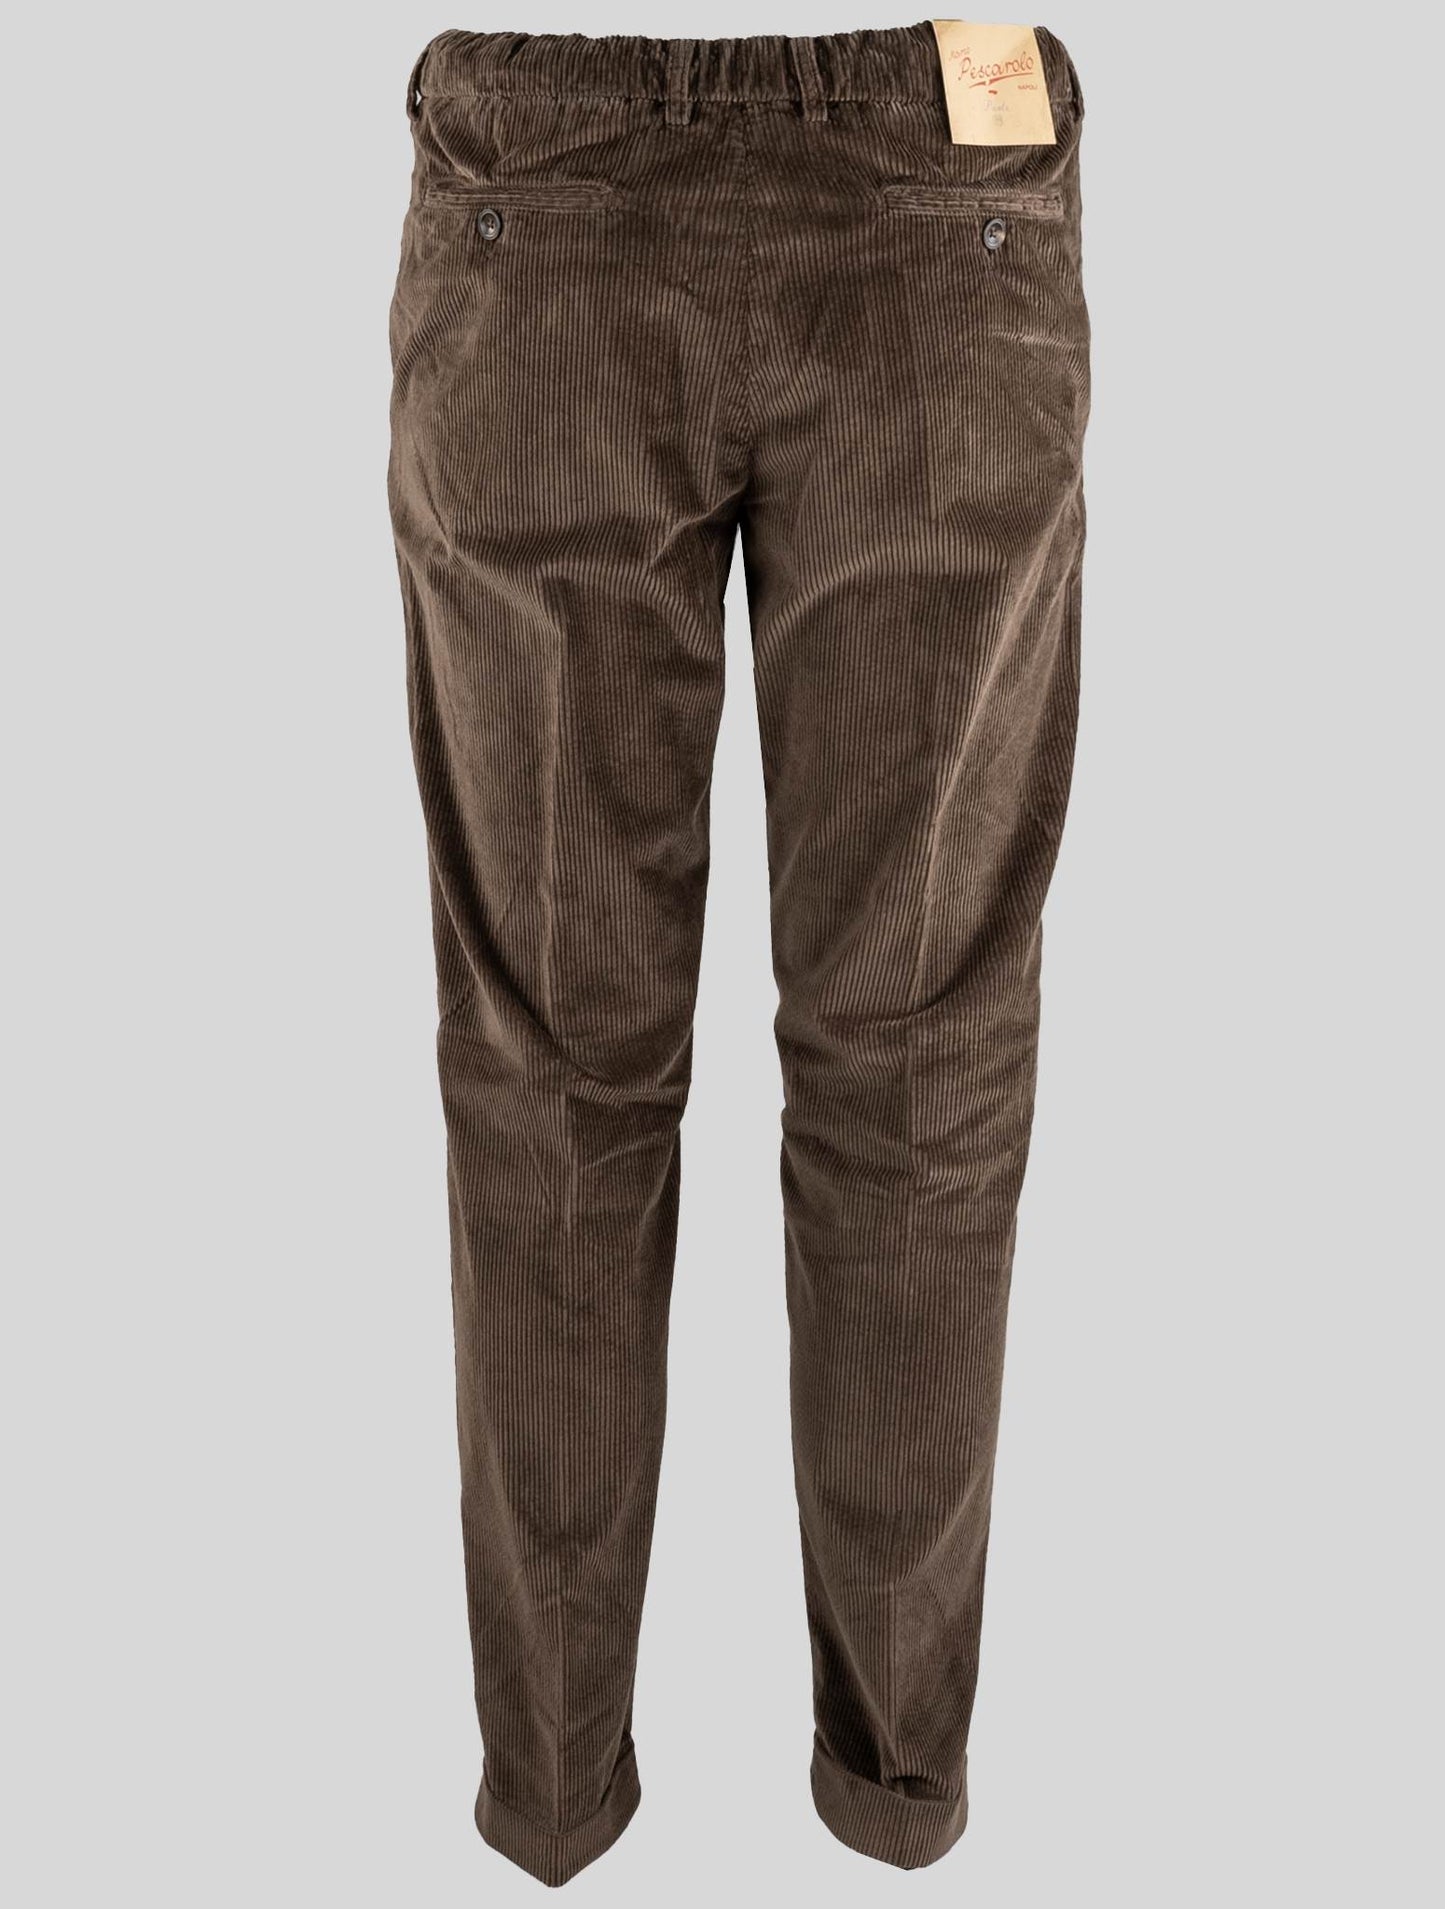 Marco Pescarolo Brown Cotton Ea Velvet Pants